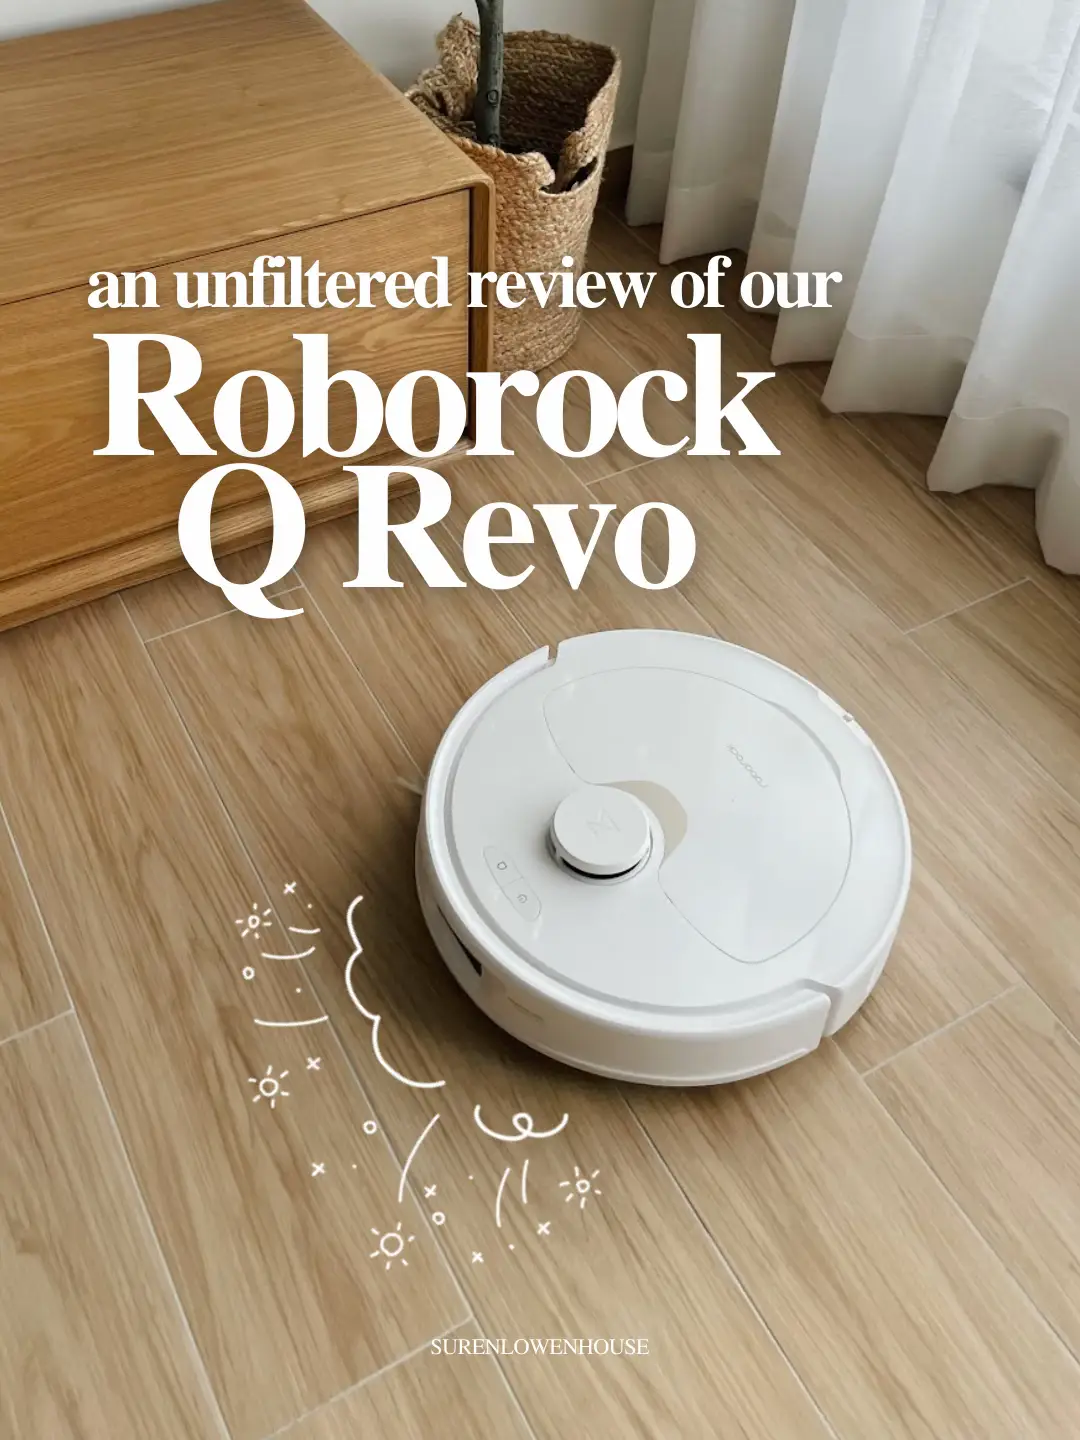 Roborock Q Revo Review. Should you buy it? - Vacuum Wars